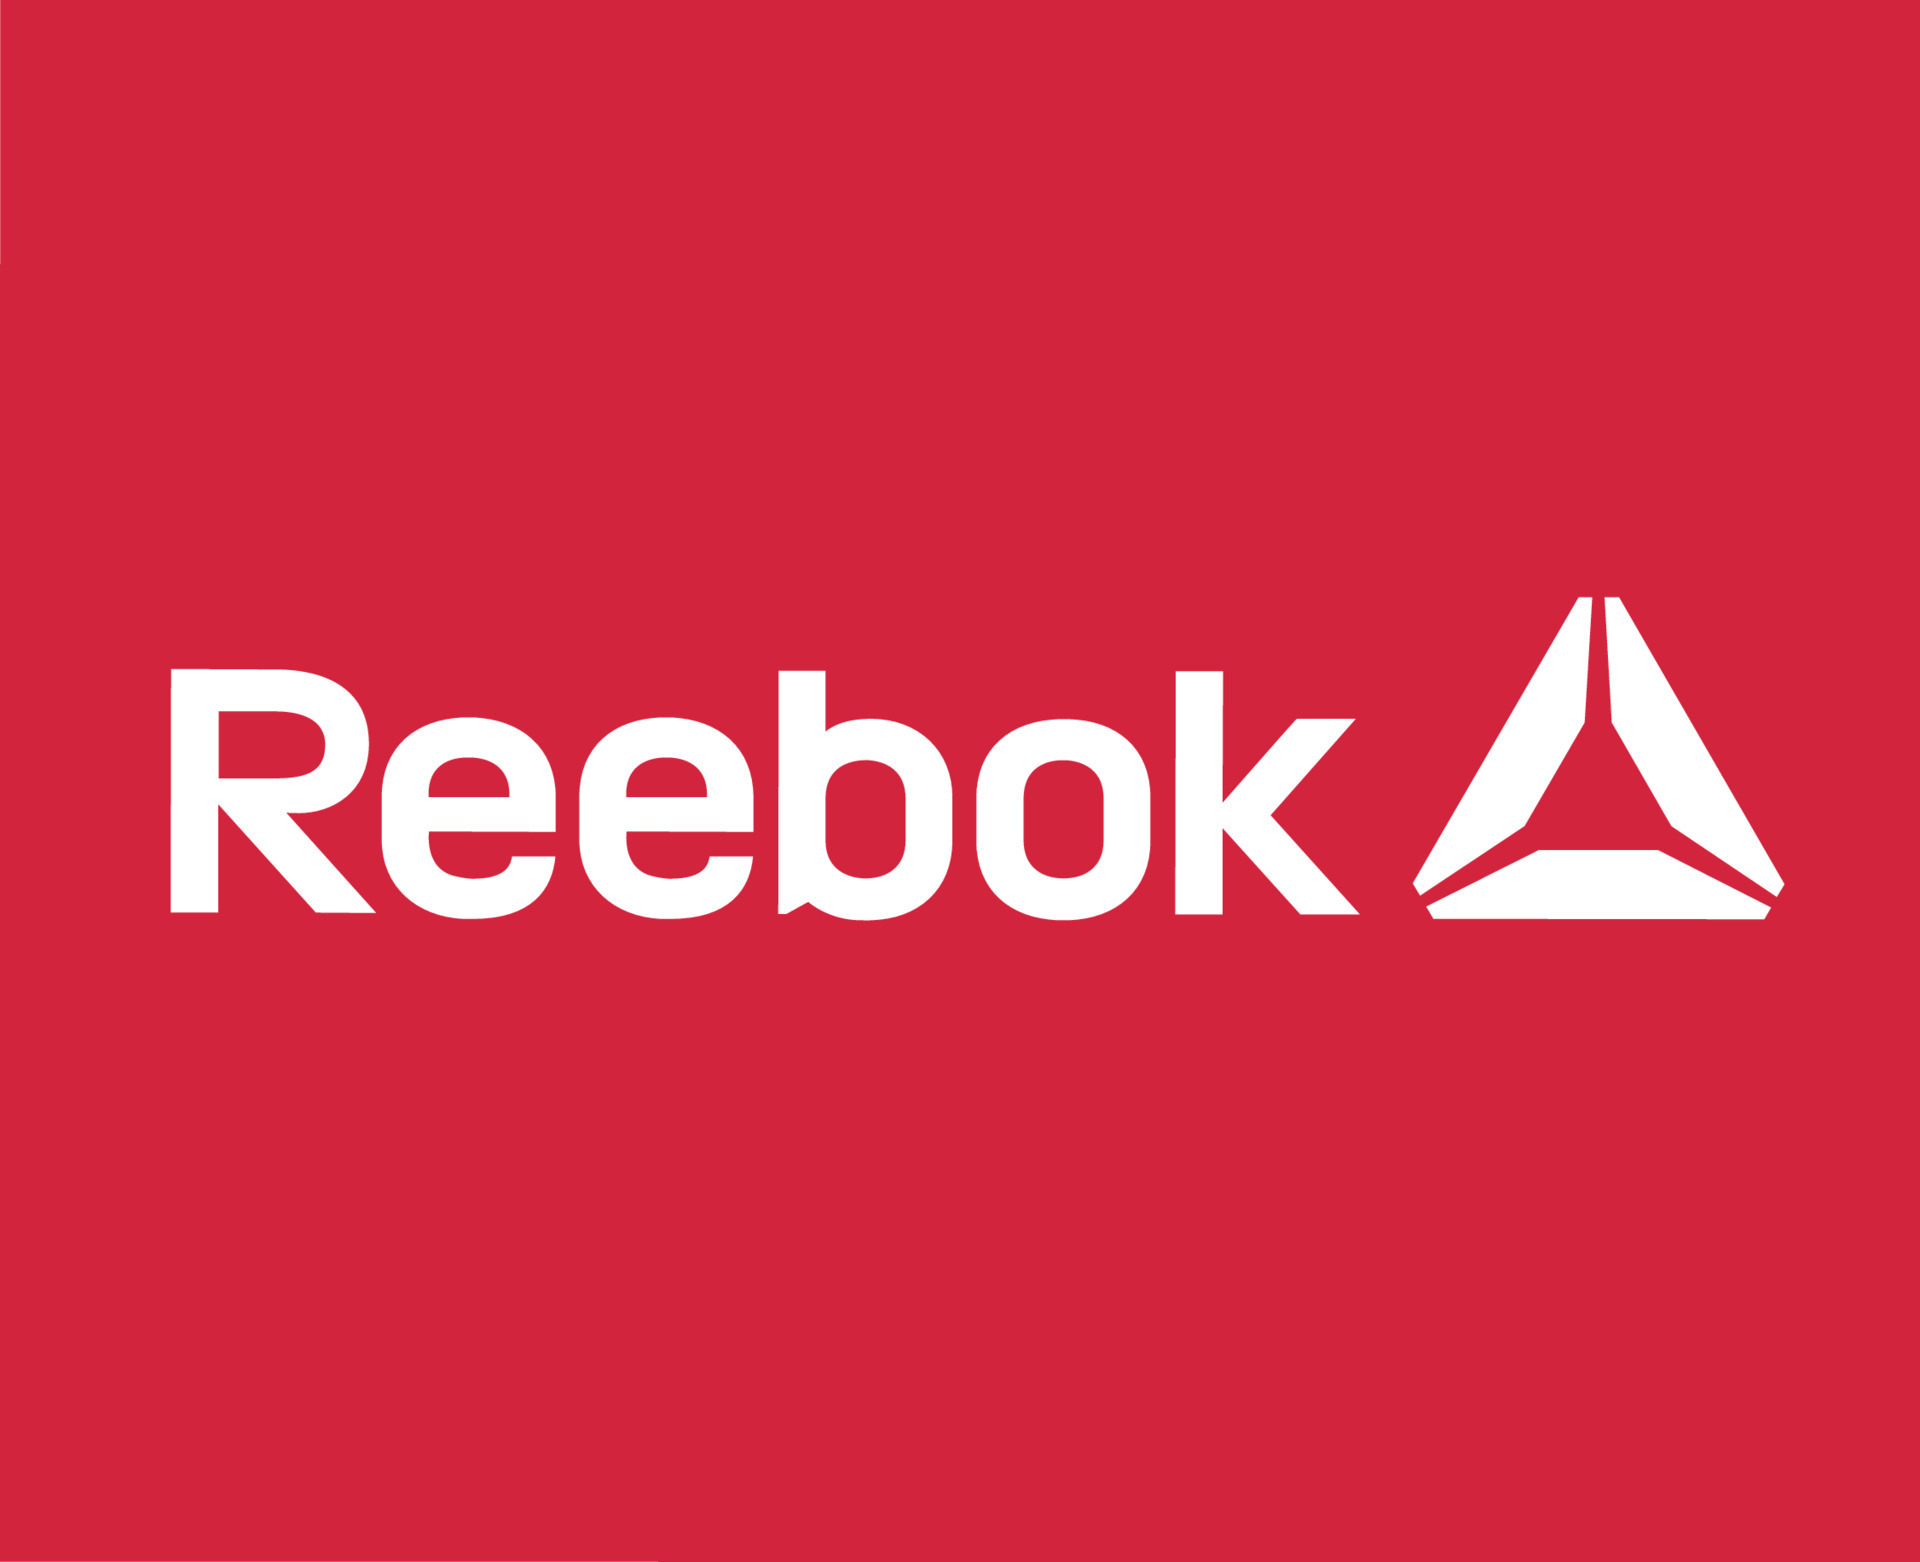 Reebok Brand Logo With Name White Symbol Clothes Design Icon Abstract ...